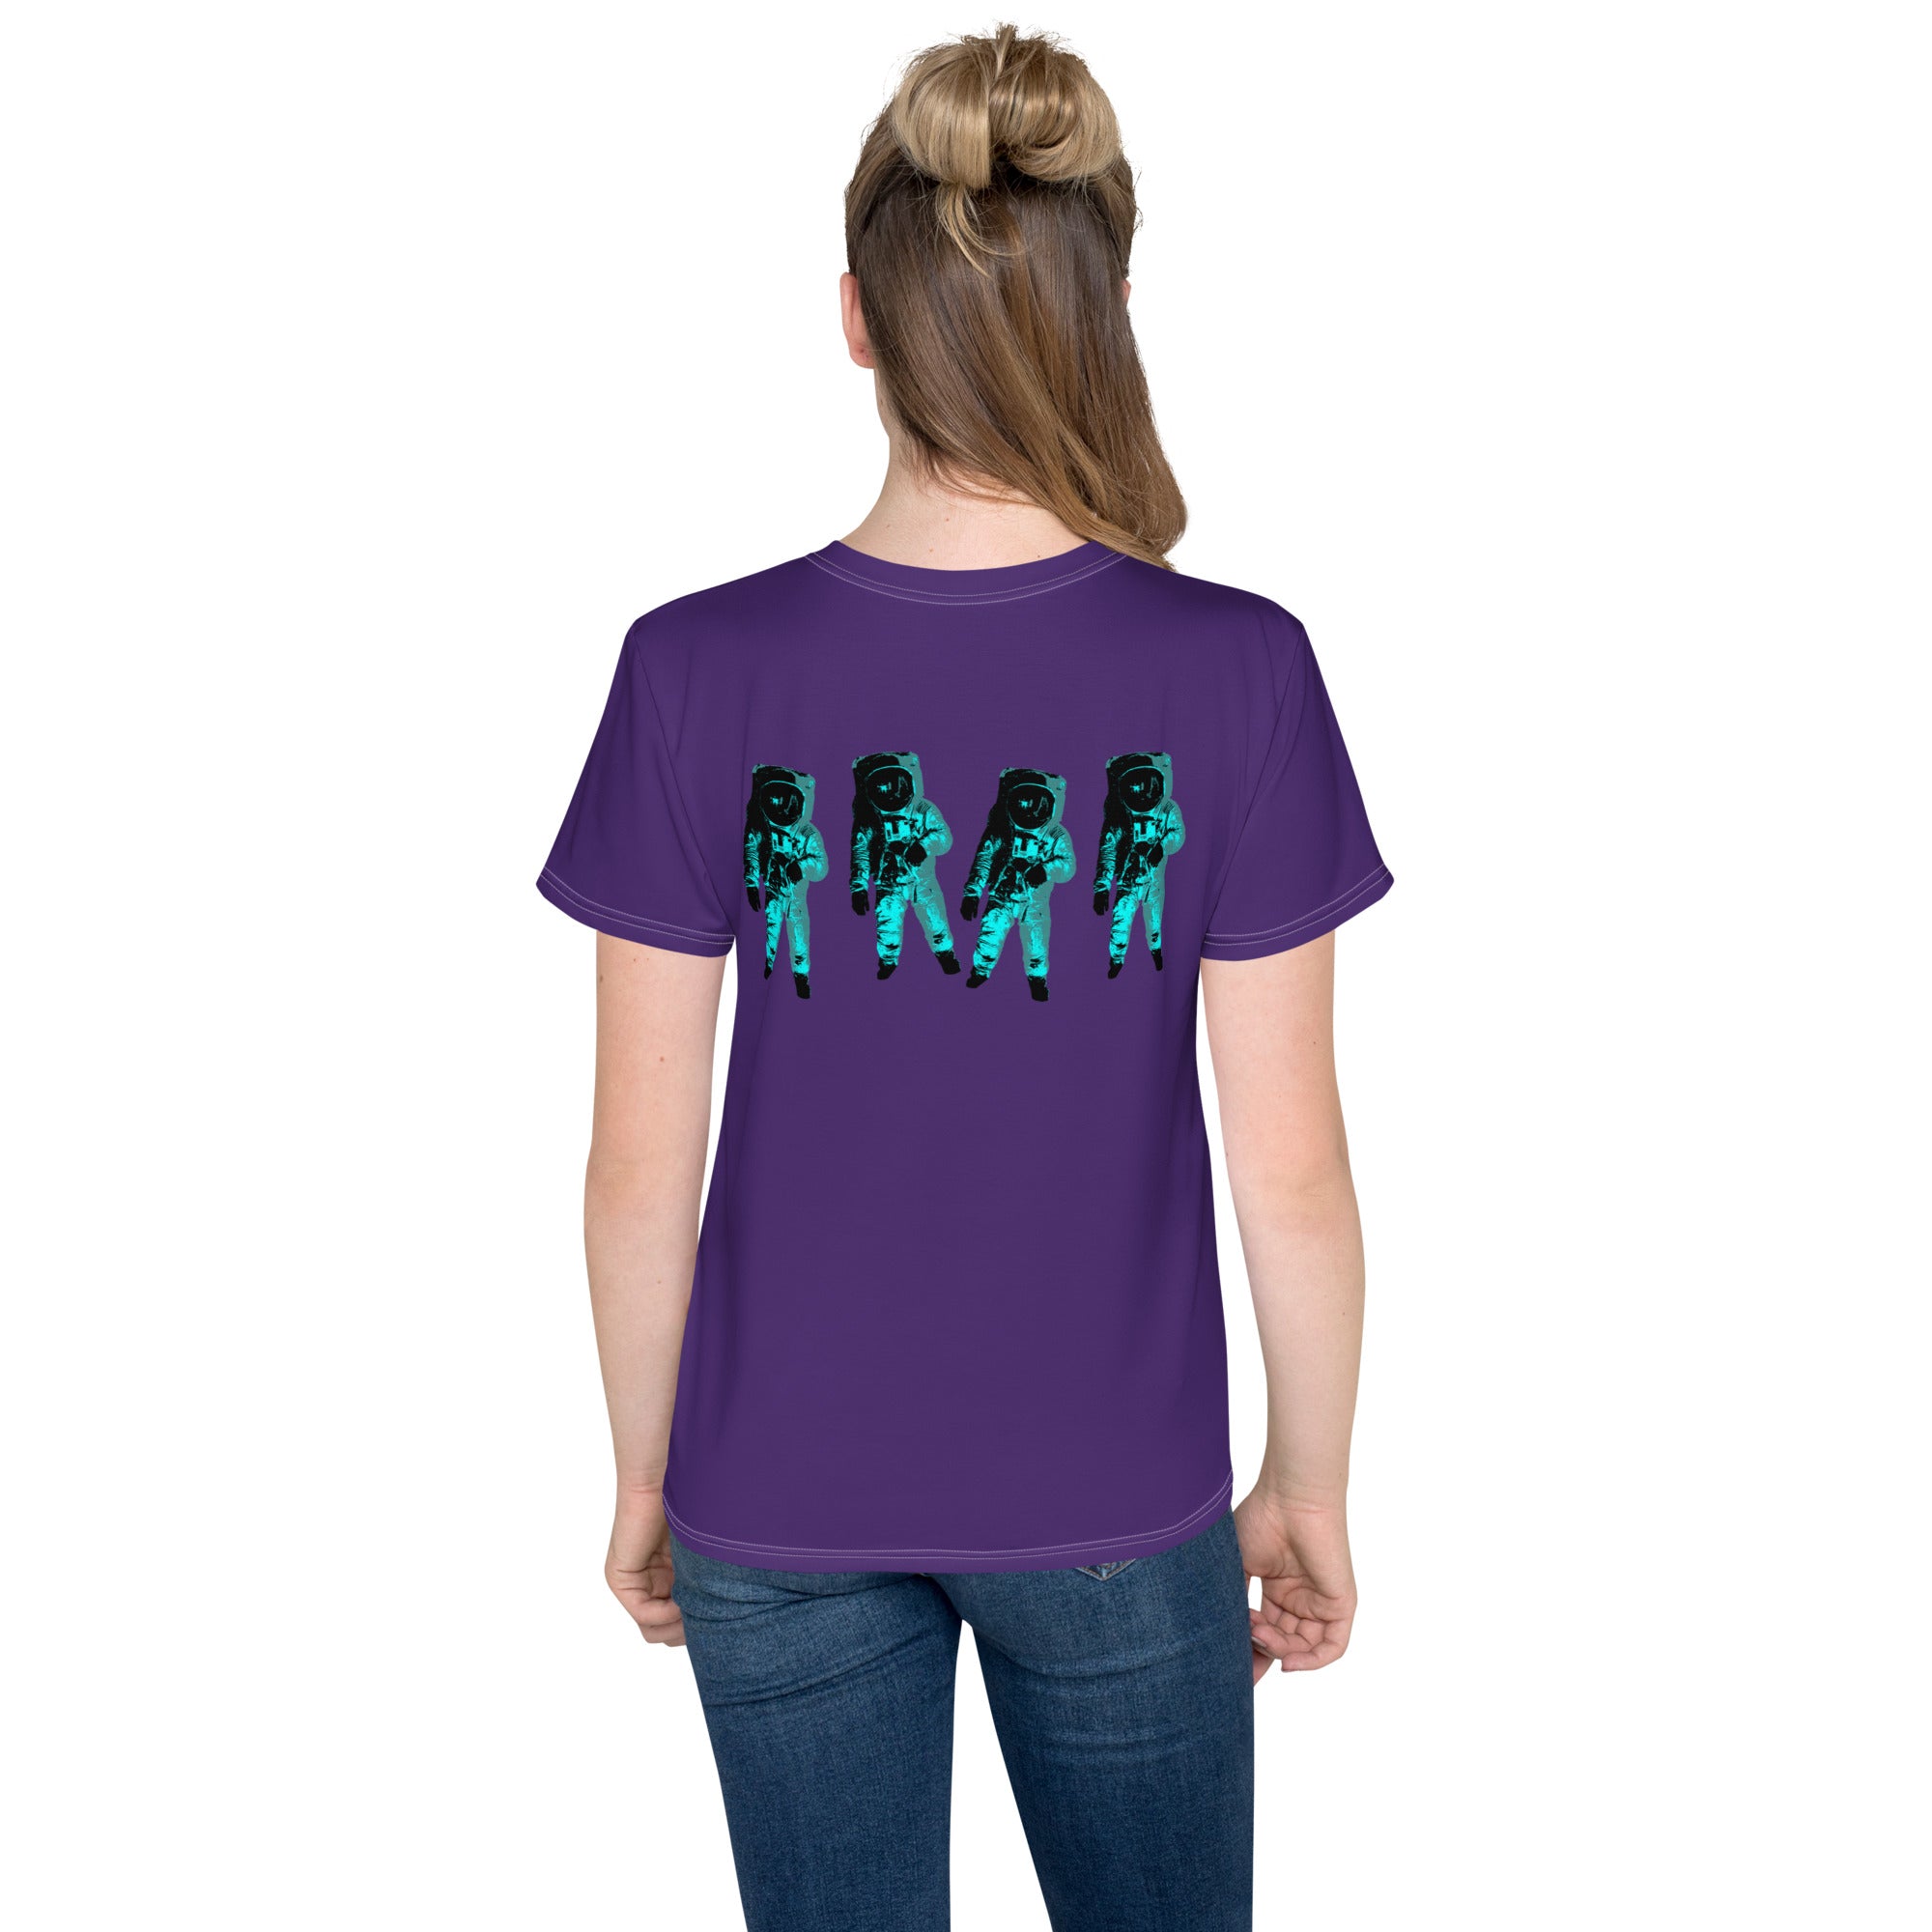 Teal moon men purple Youth crew neck t-shirt